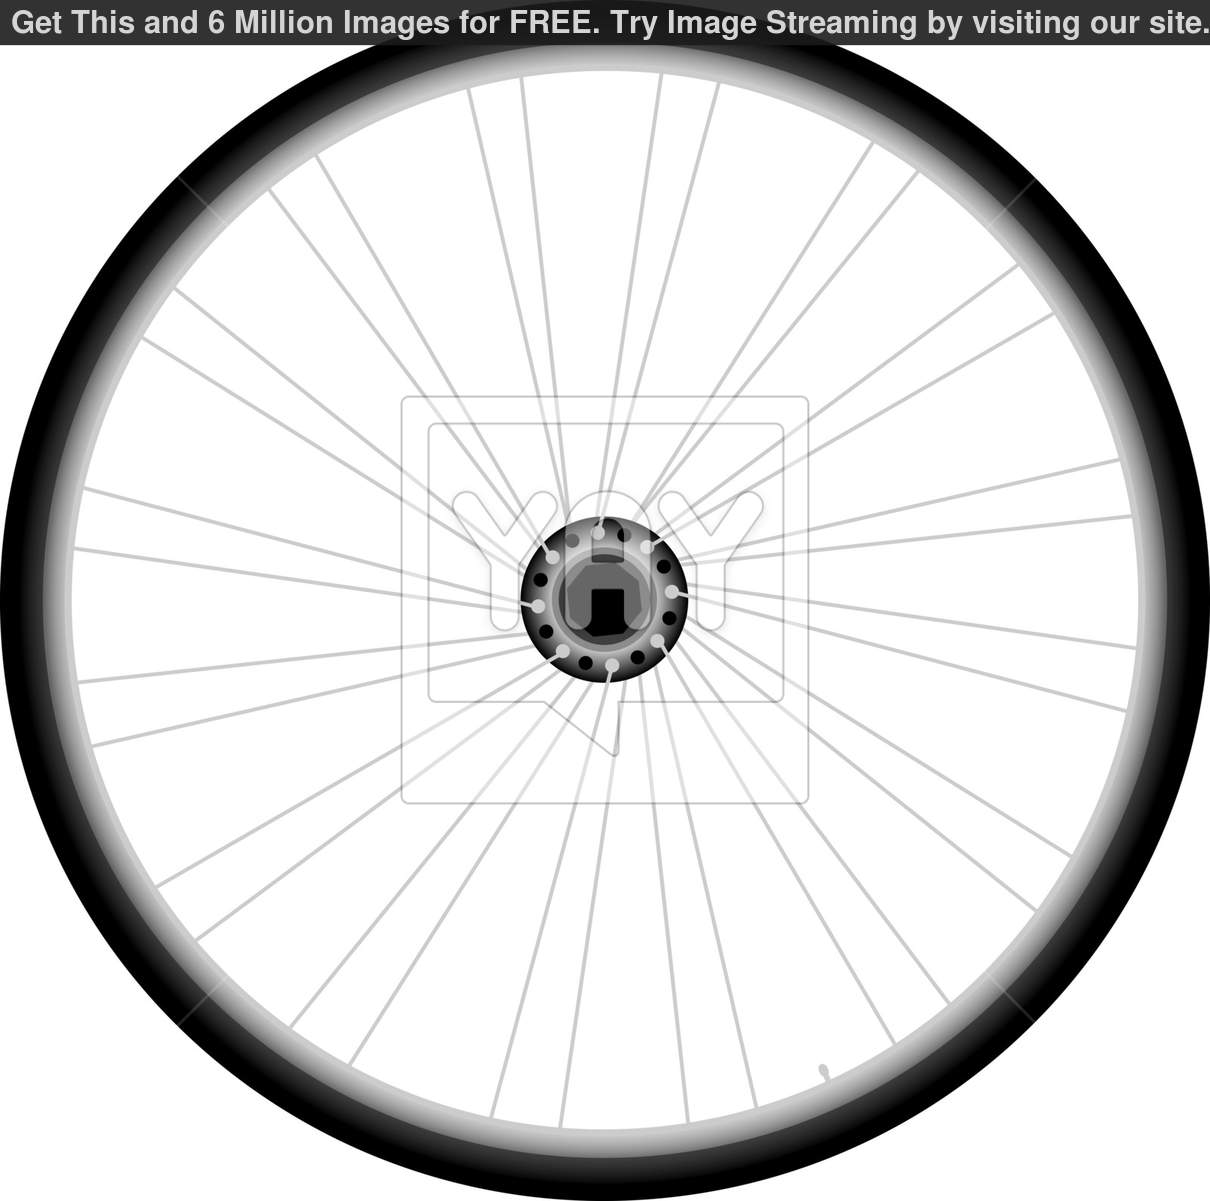 Bike Wheel Vector